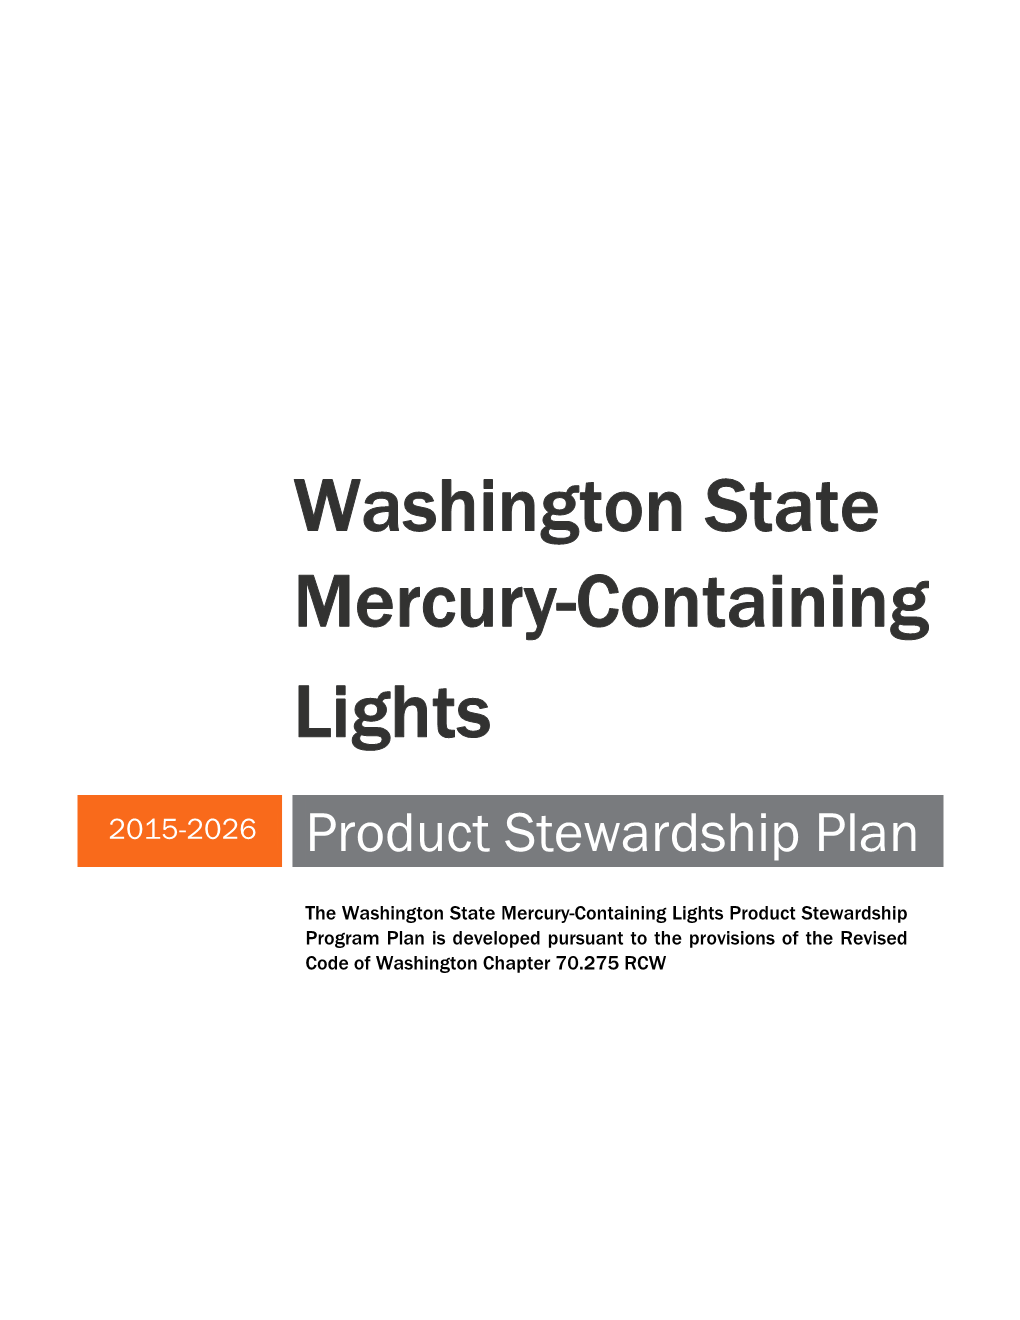 Washington State Mercury-Containing Lights